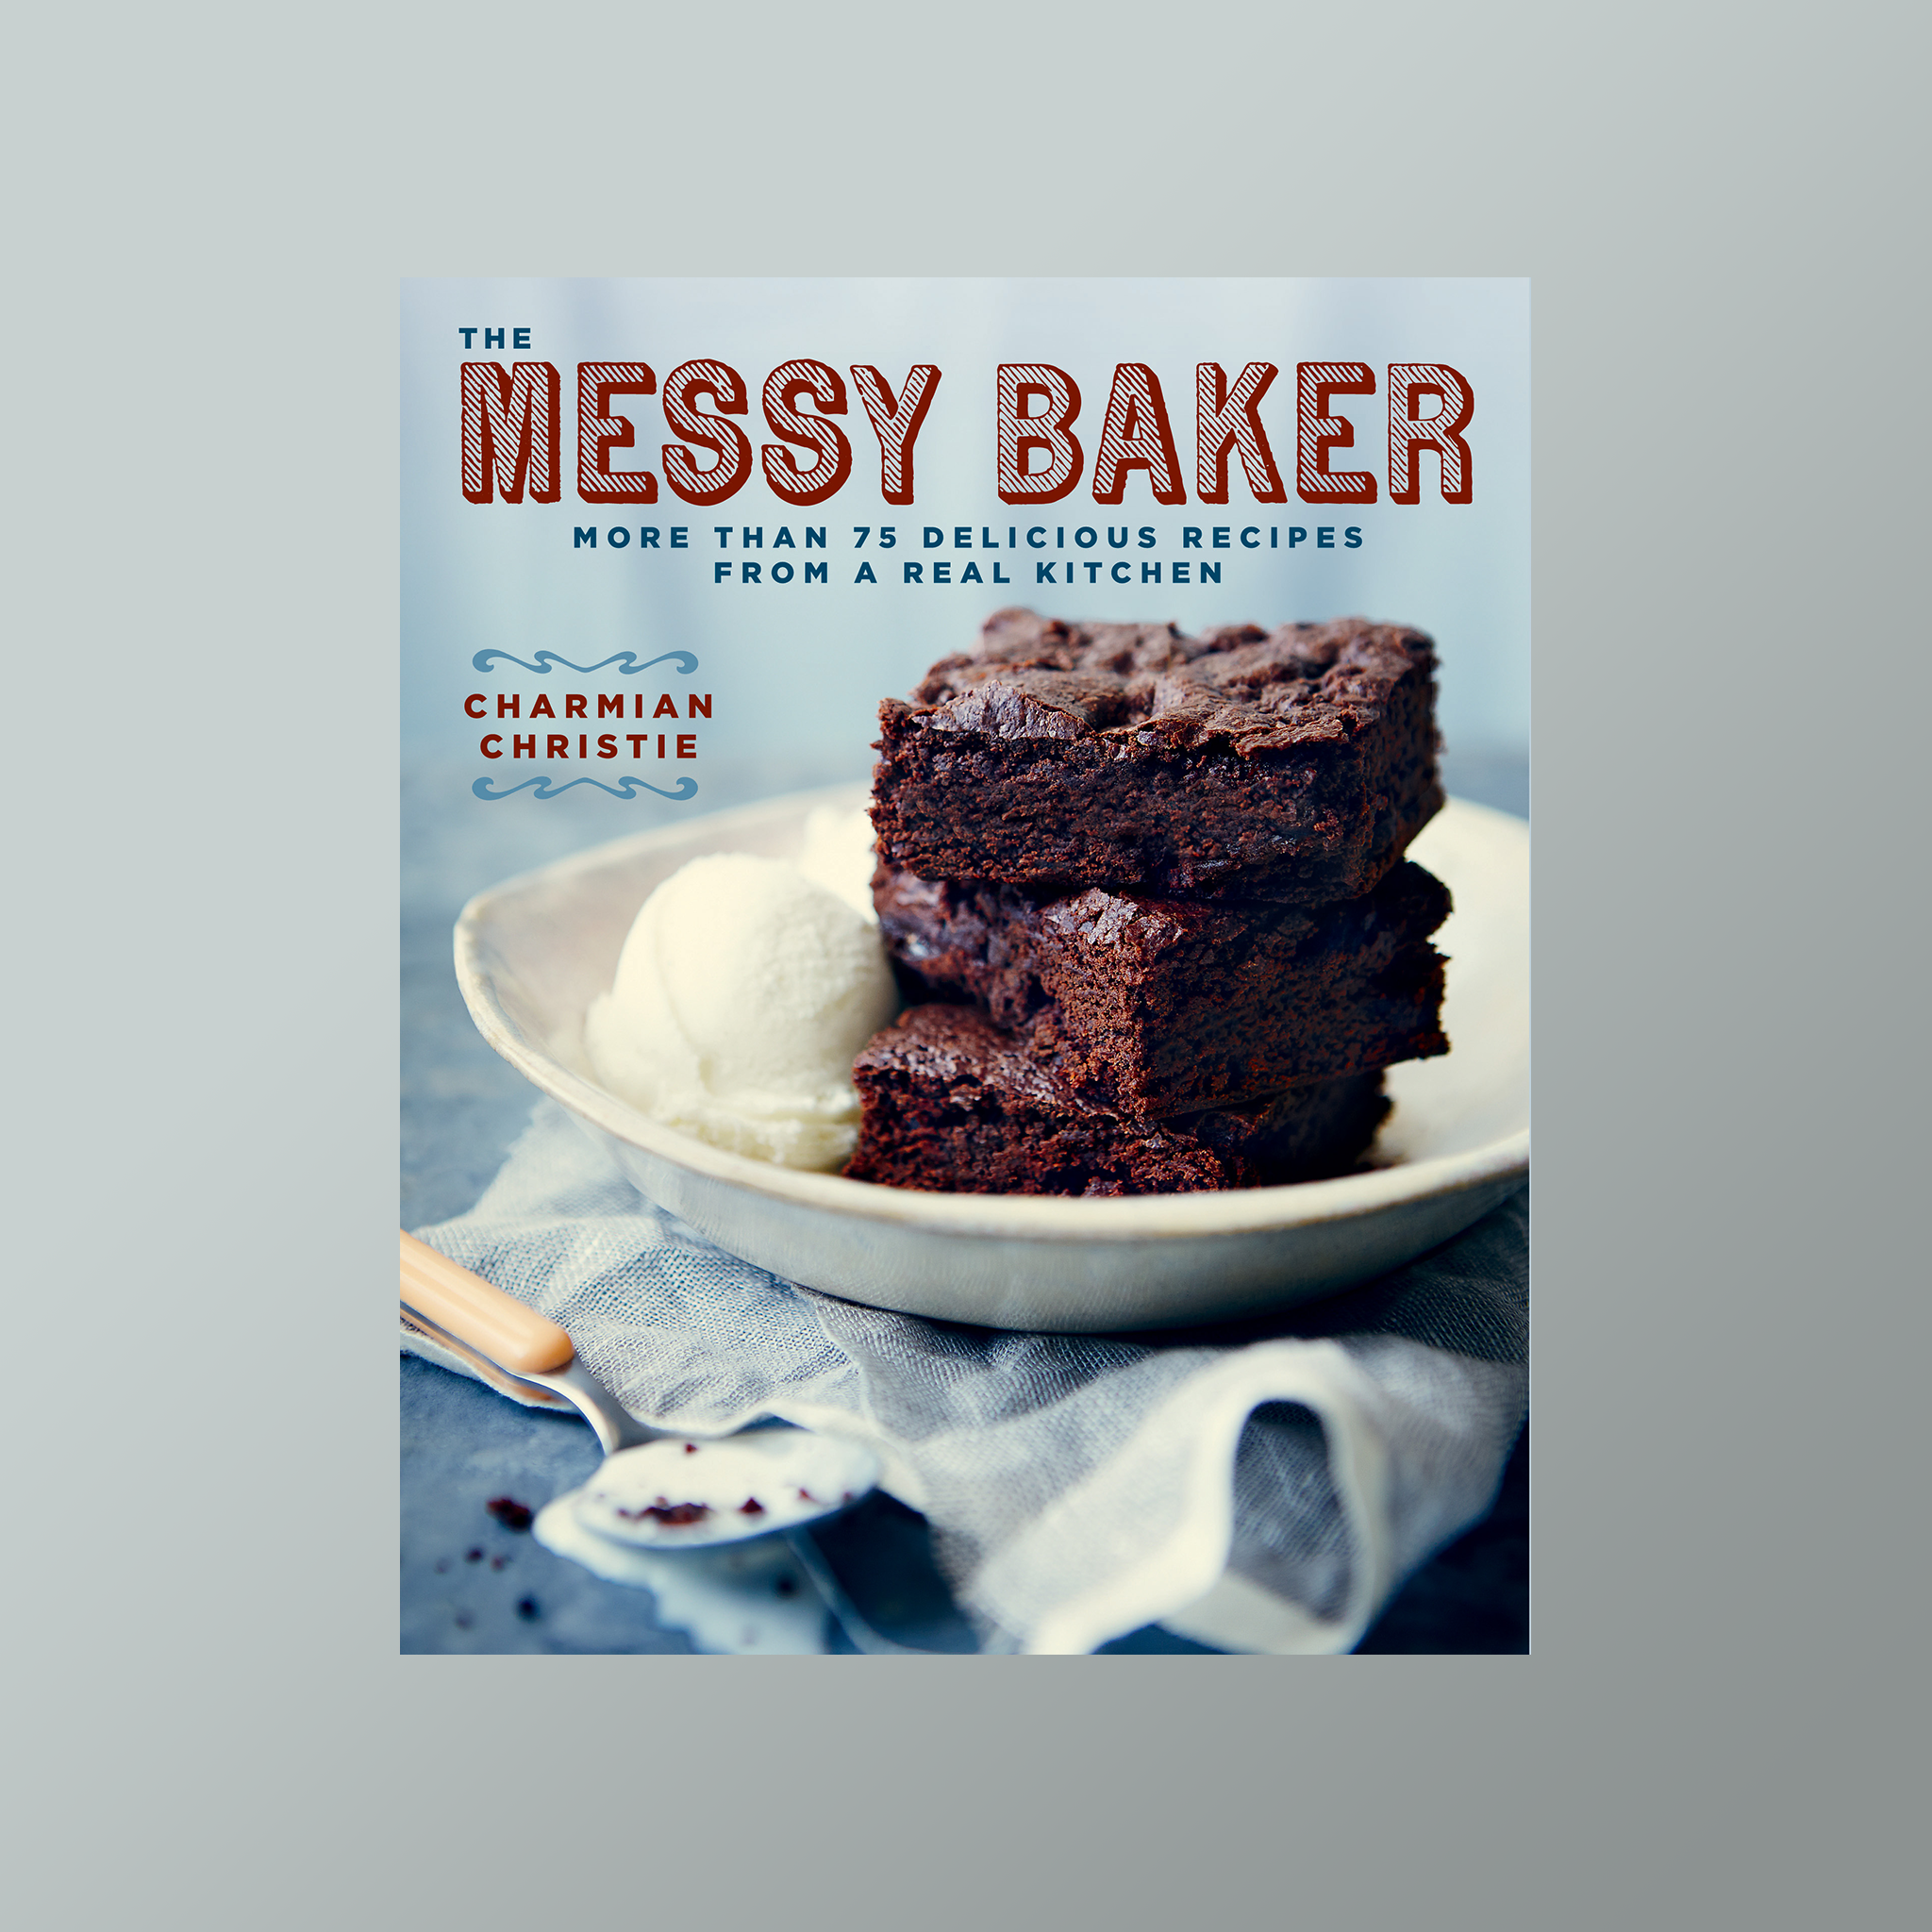 The Messy Baker